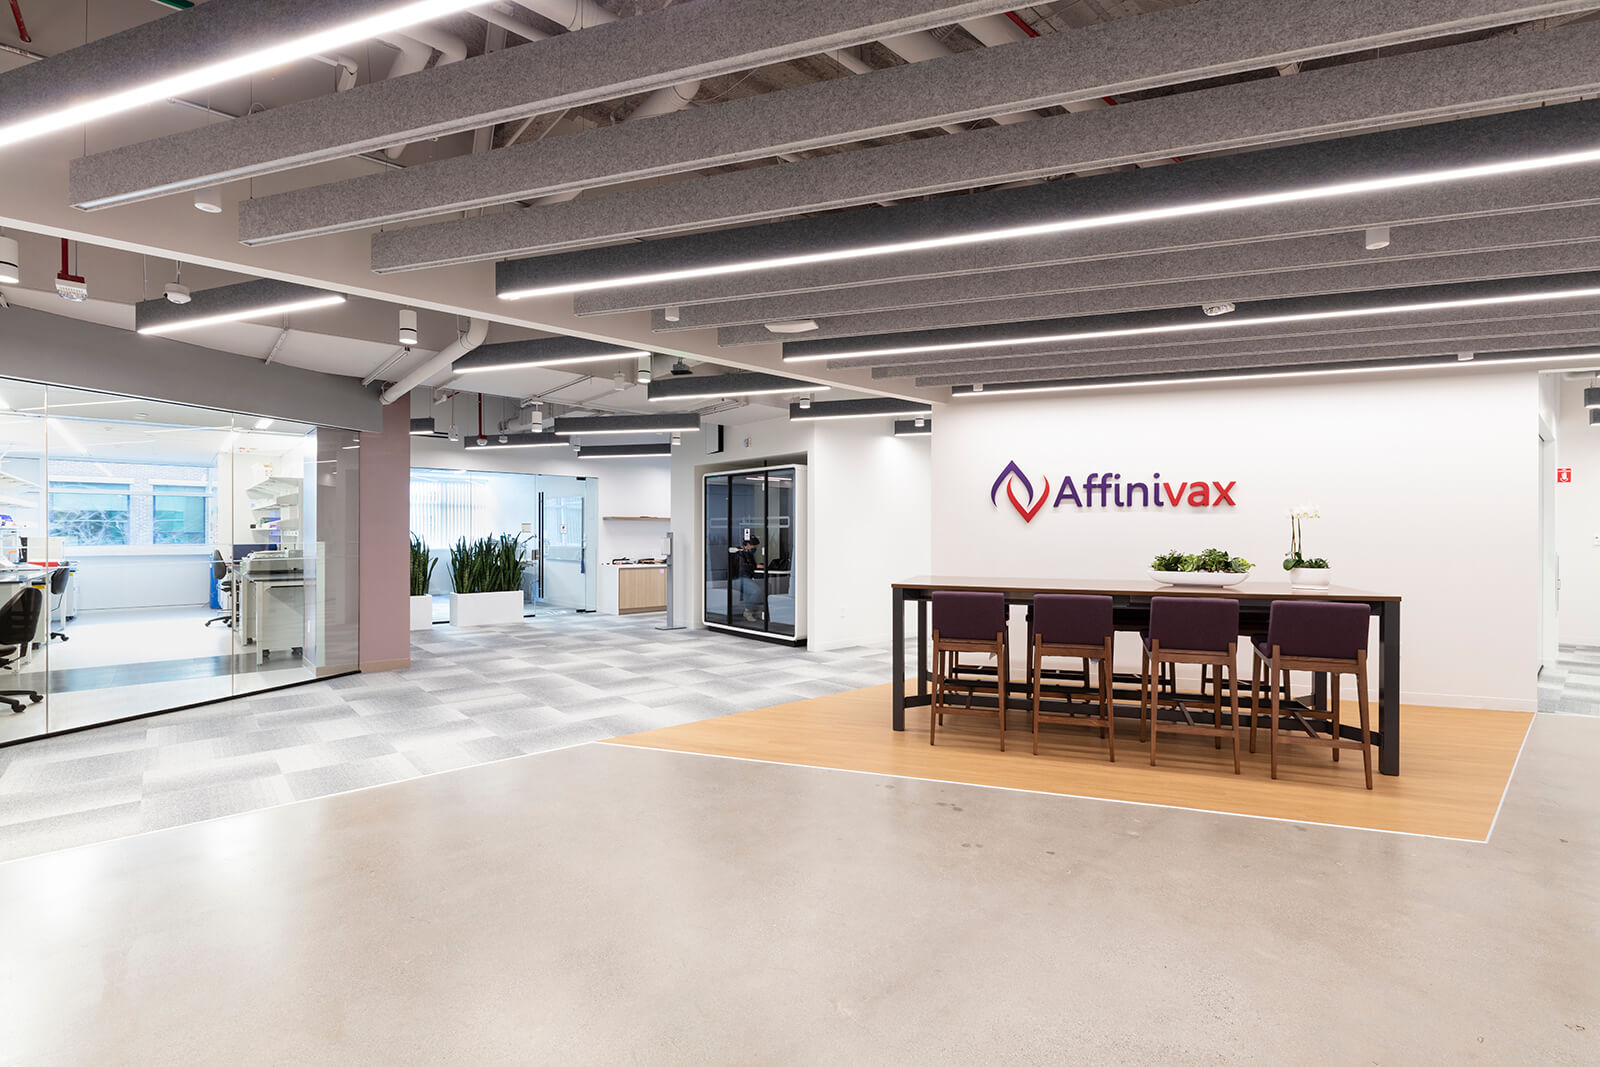 affinivax building photos - design build services firm for affinivax 3